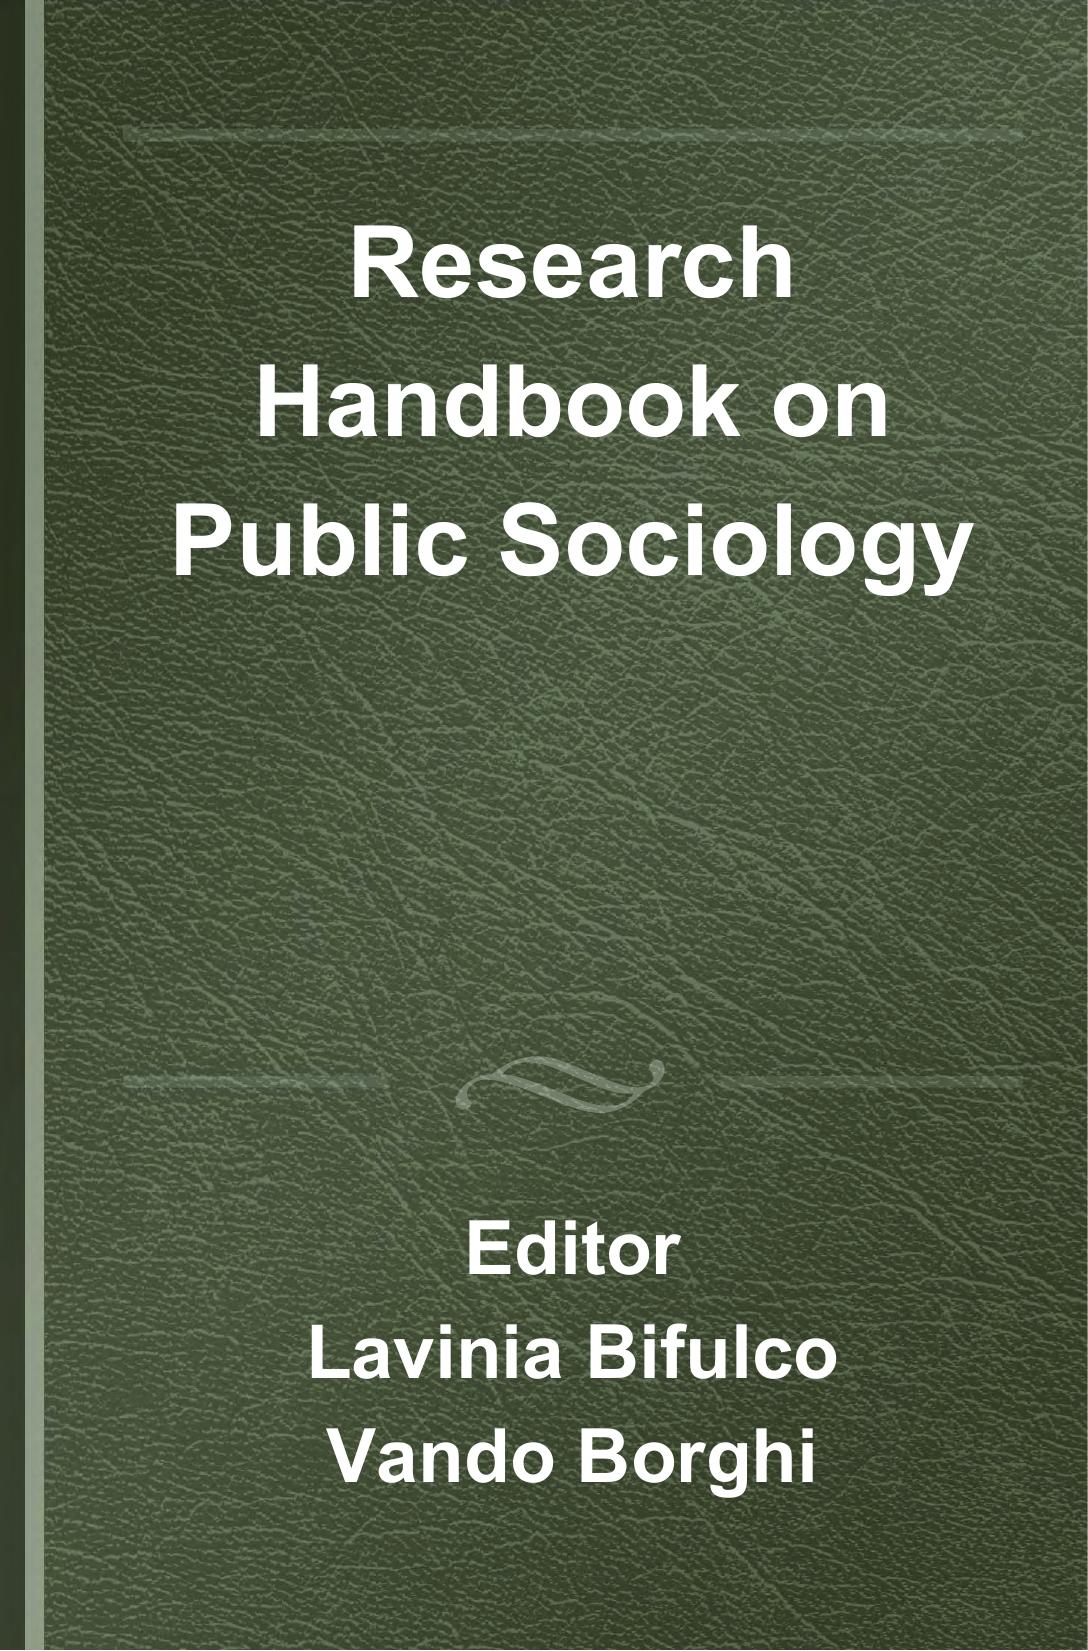 Research Handbook on Public Sociology (Research Handbooks in Sociology series) by Lavinia Bifulco (editor) Vando Borghi (editor)